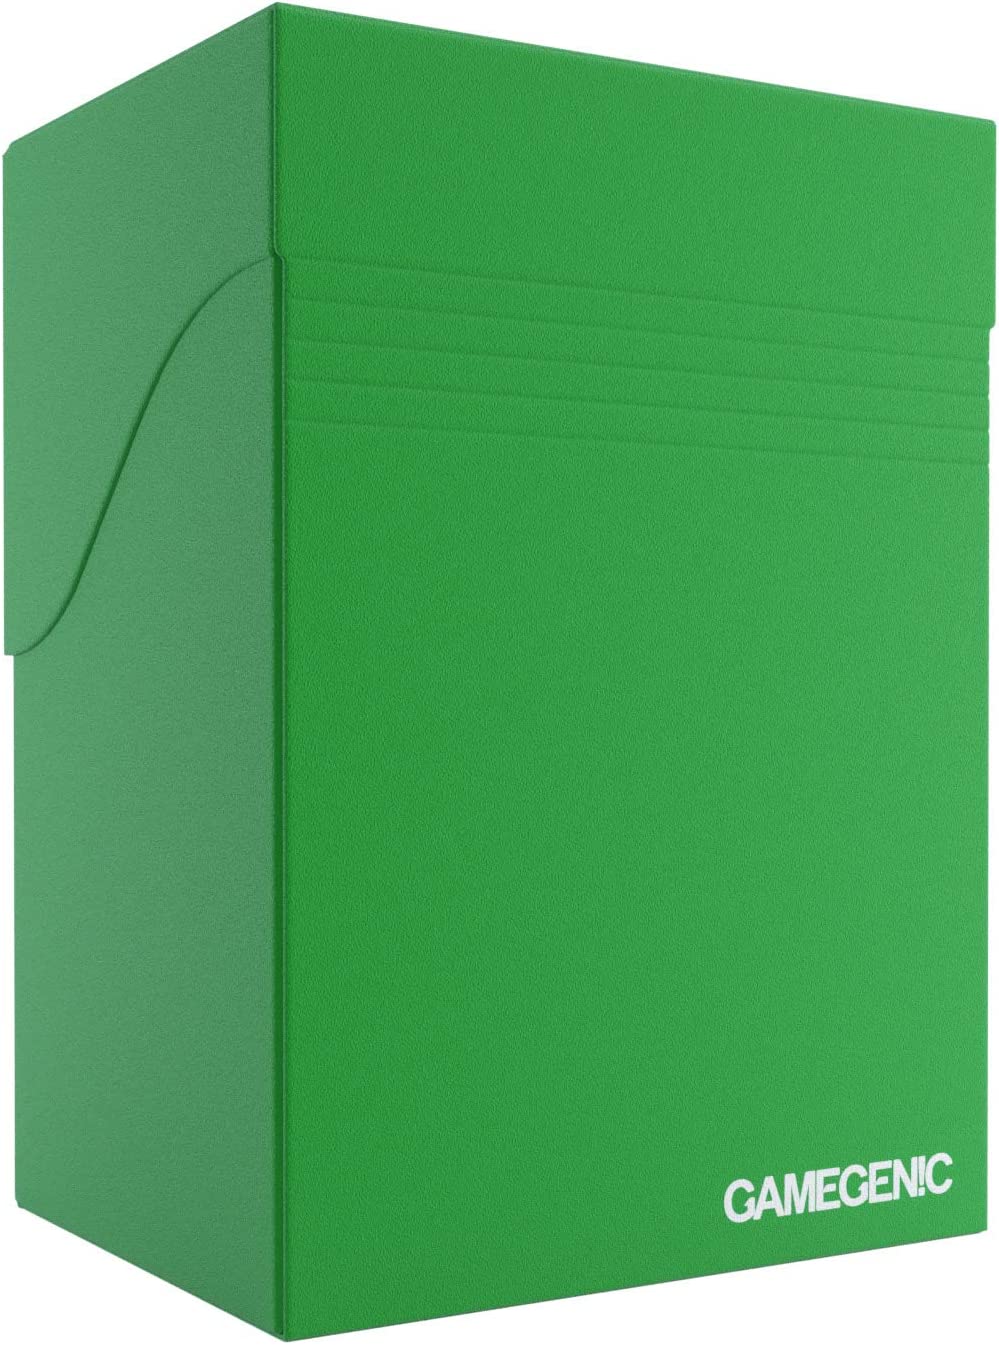 Gamegenic 80-Card Deck Holder, Green (GGS25024ML)